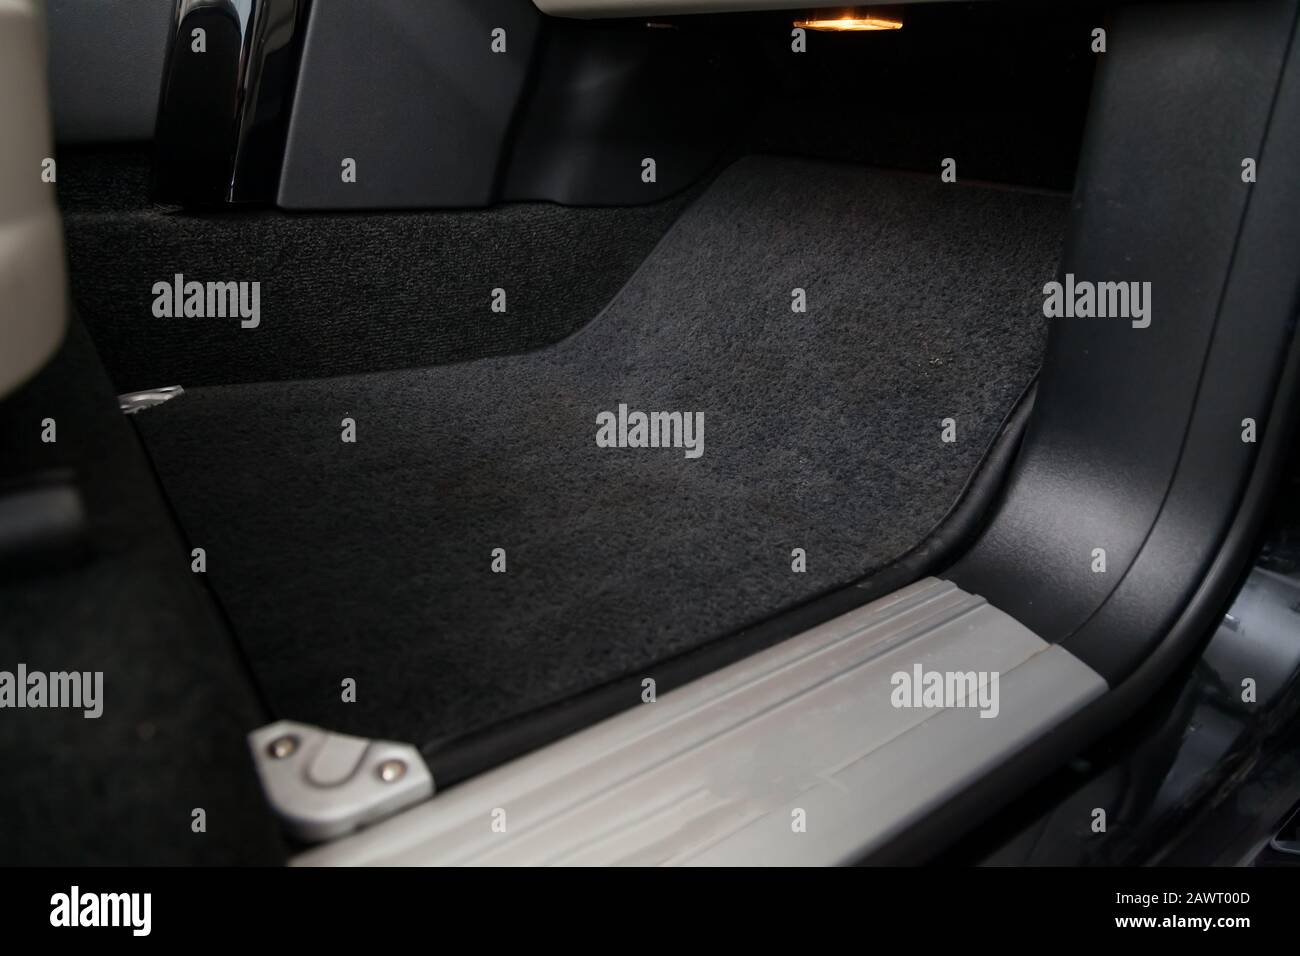 Clean Car Floor Mats Of Black Carpet Under Front Passenger Seat In